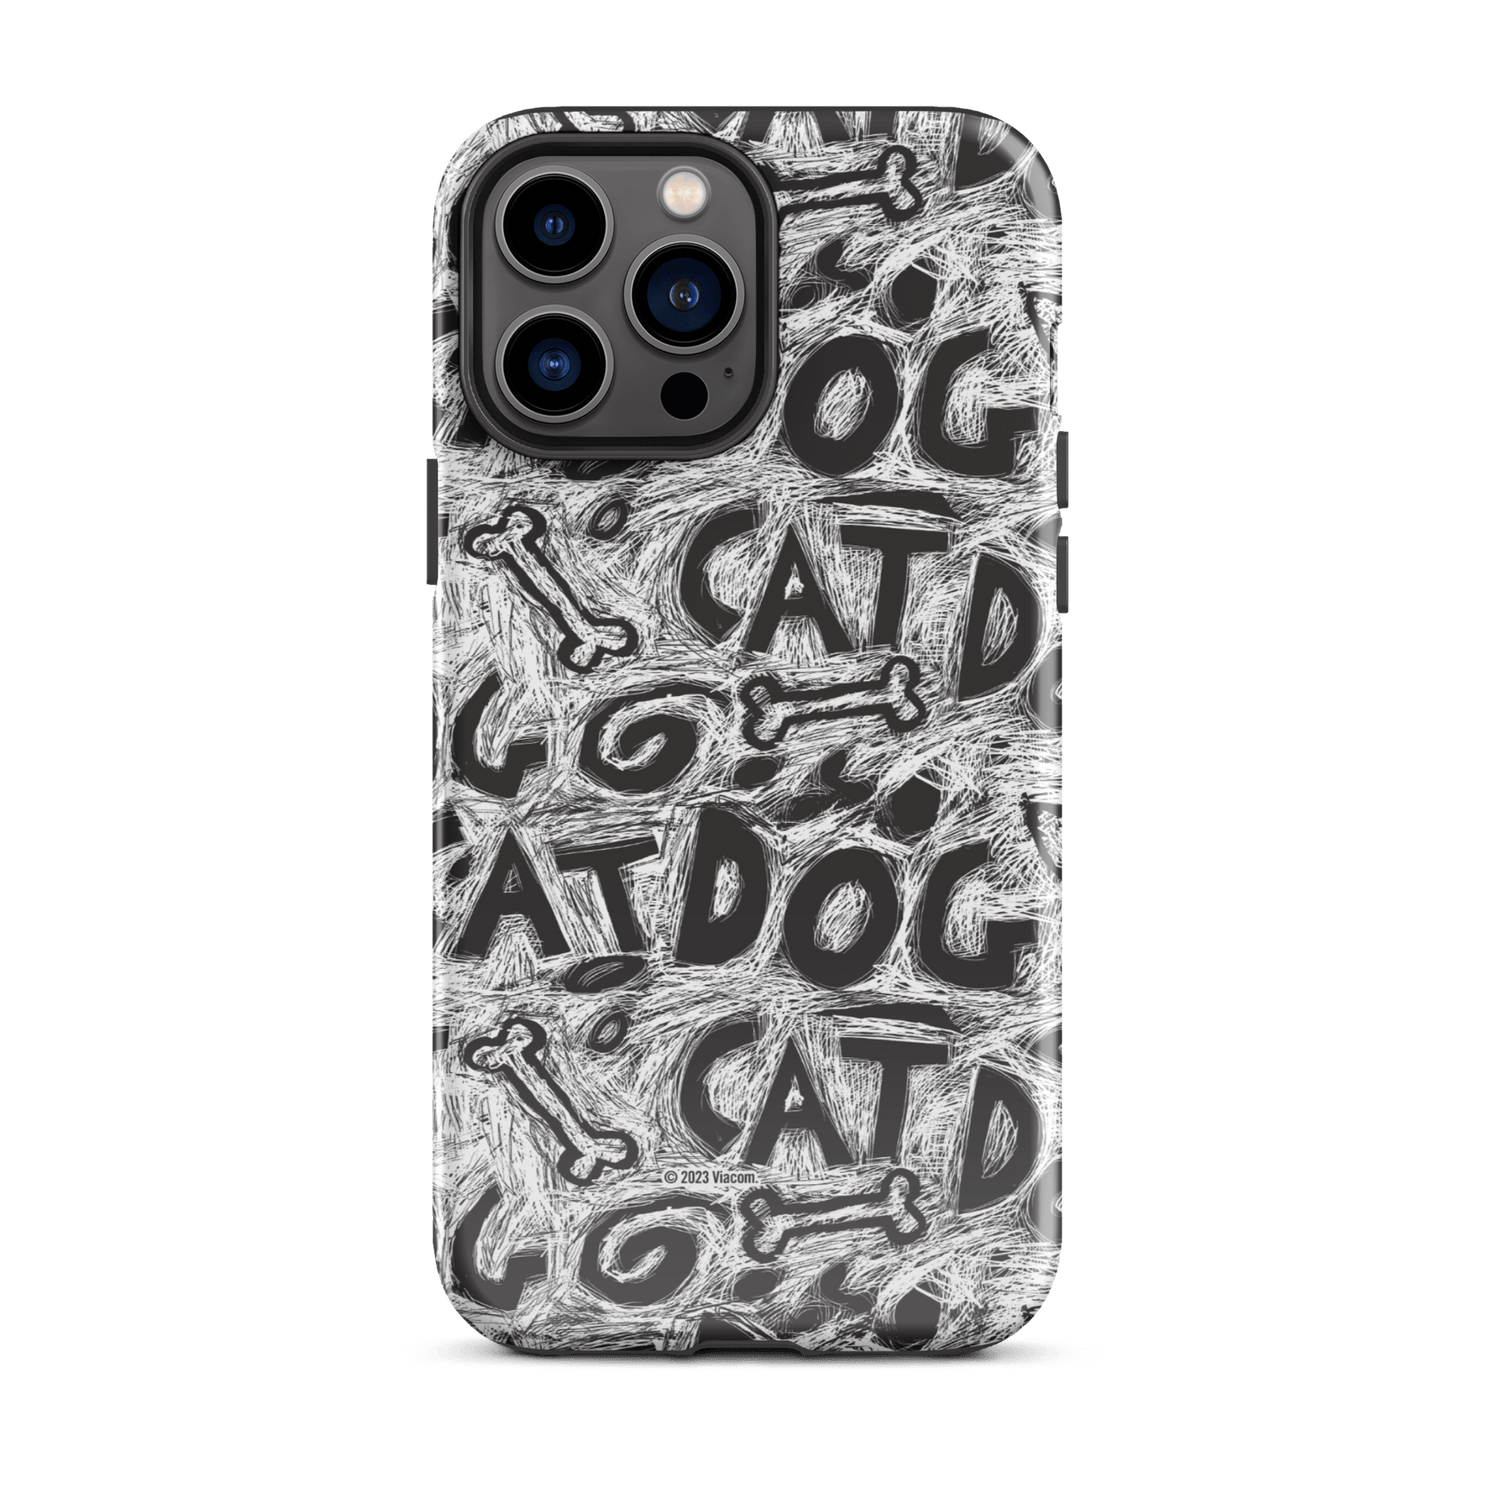 CatDog Scratch Pattern Tough Case for iPhone - Paramount Shop